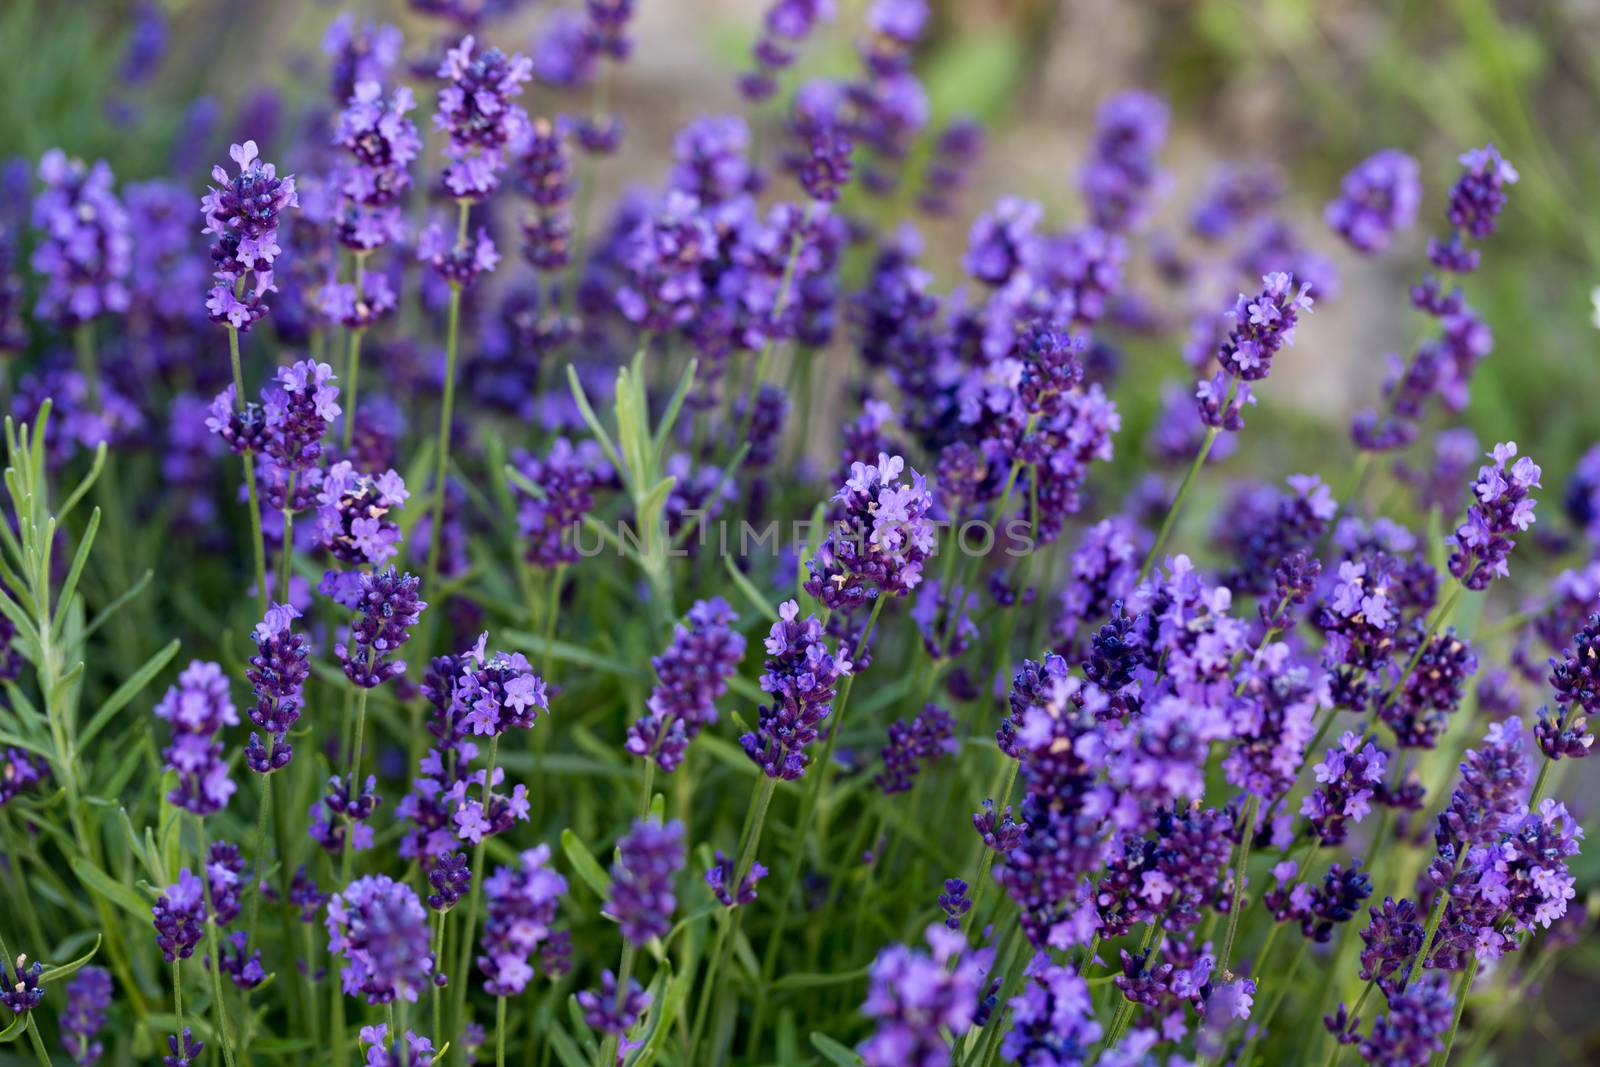 Gardens with the flourishing lavender by wjarek